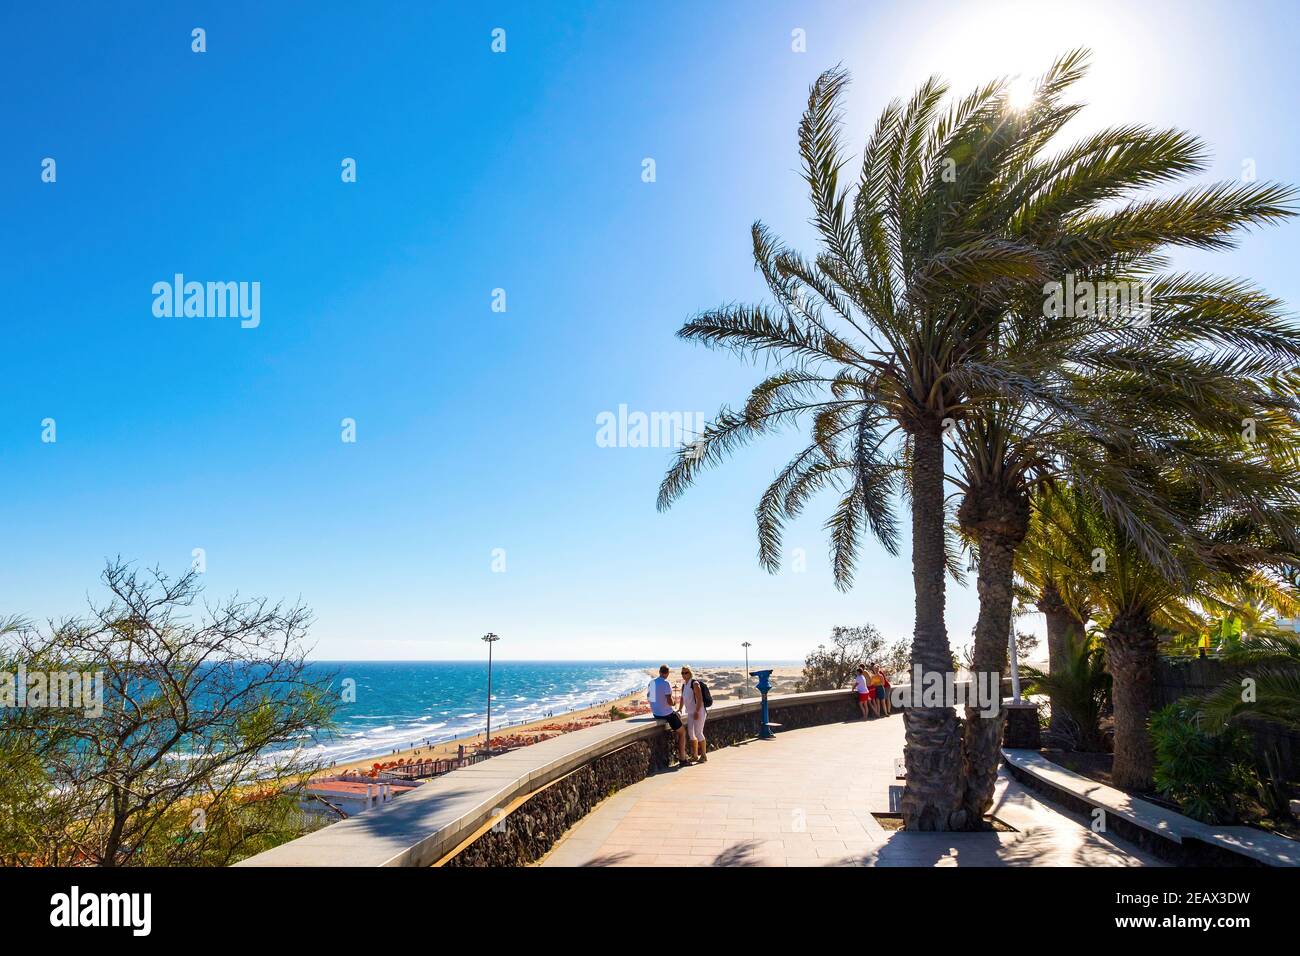 Gran Canaria island, Spain - December 11, 2018: Maspalomas Beach promenade (Playa de Maspalomas) on Gran Canaria island, Canary Islands, Spain. One of Stock Photo